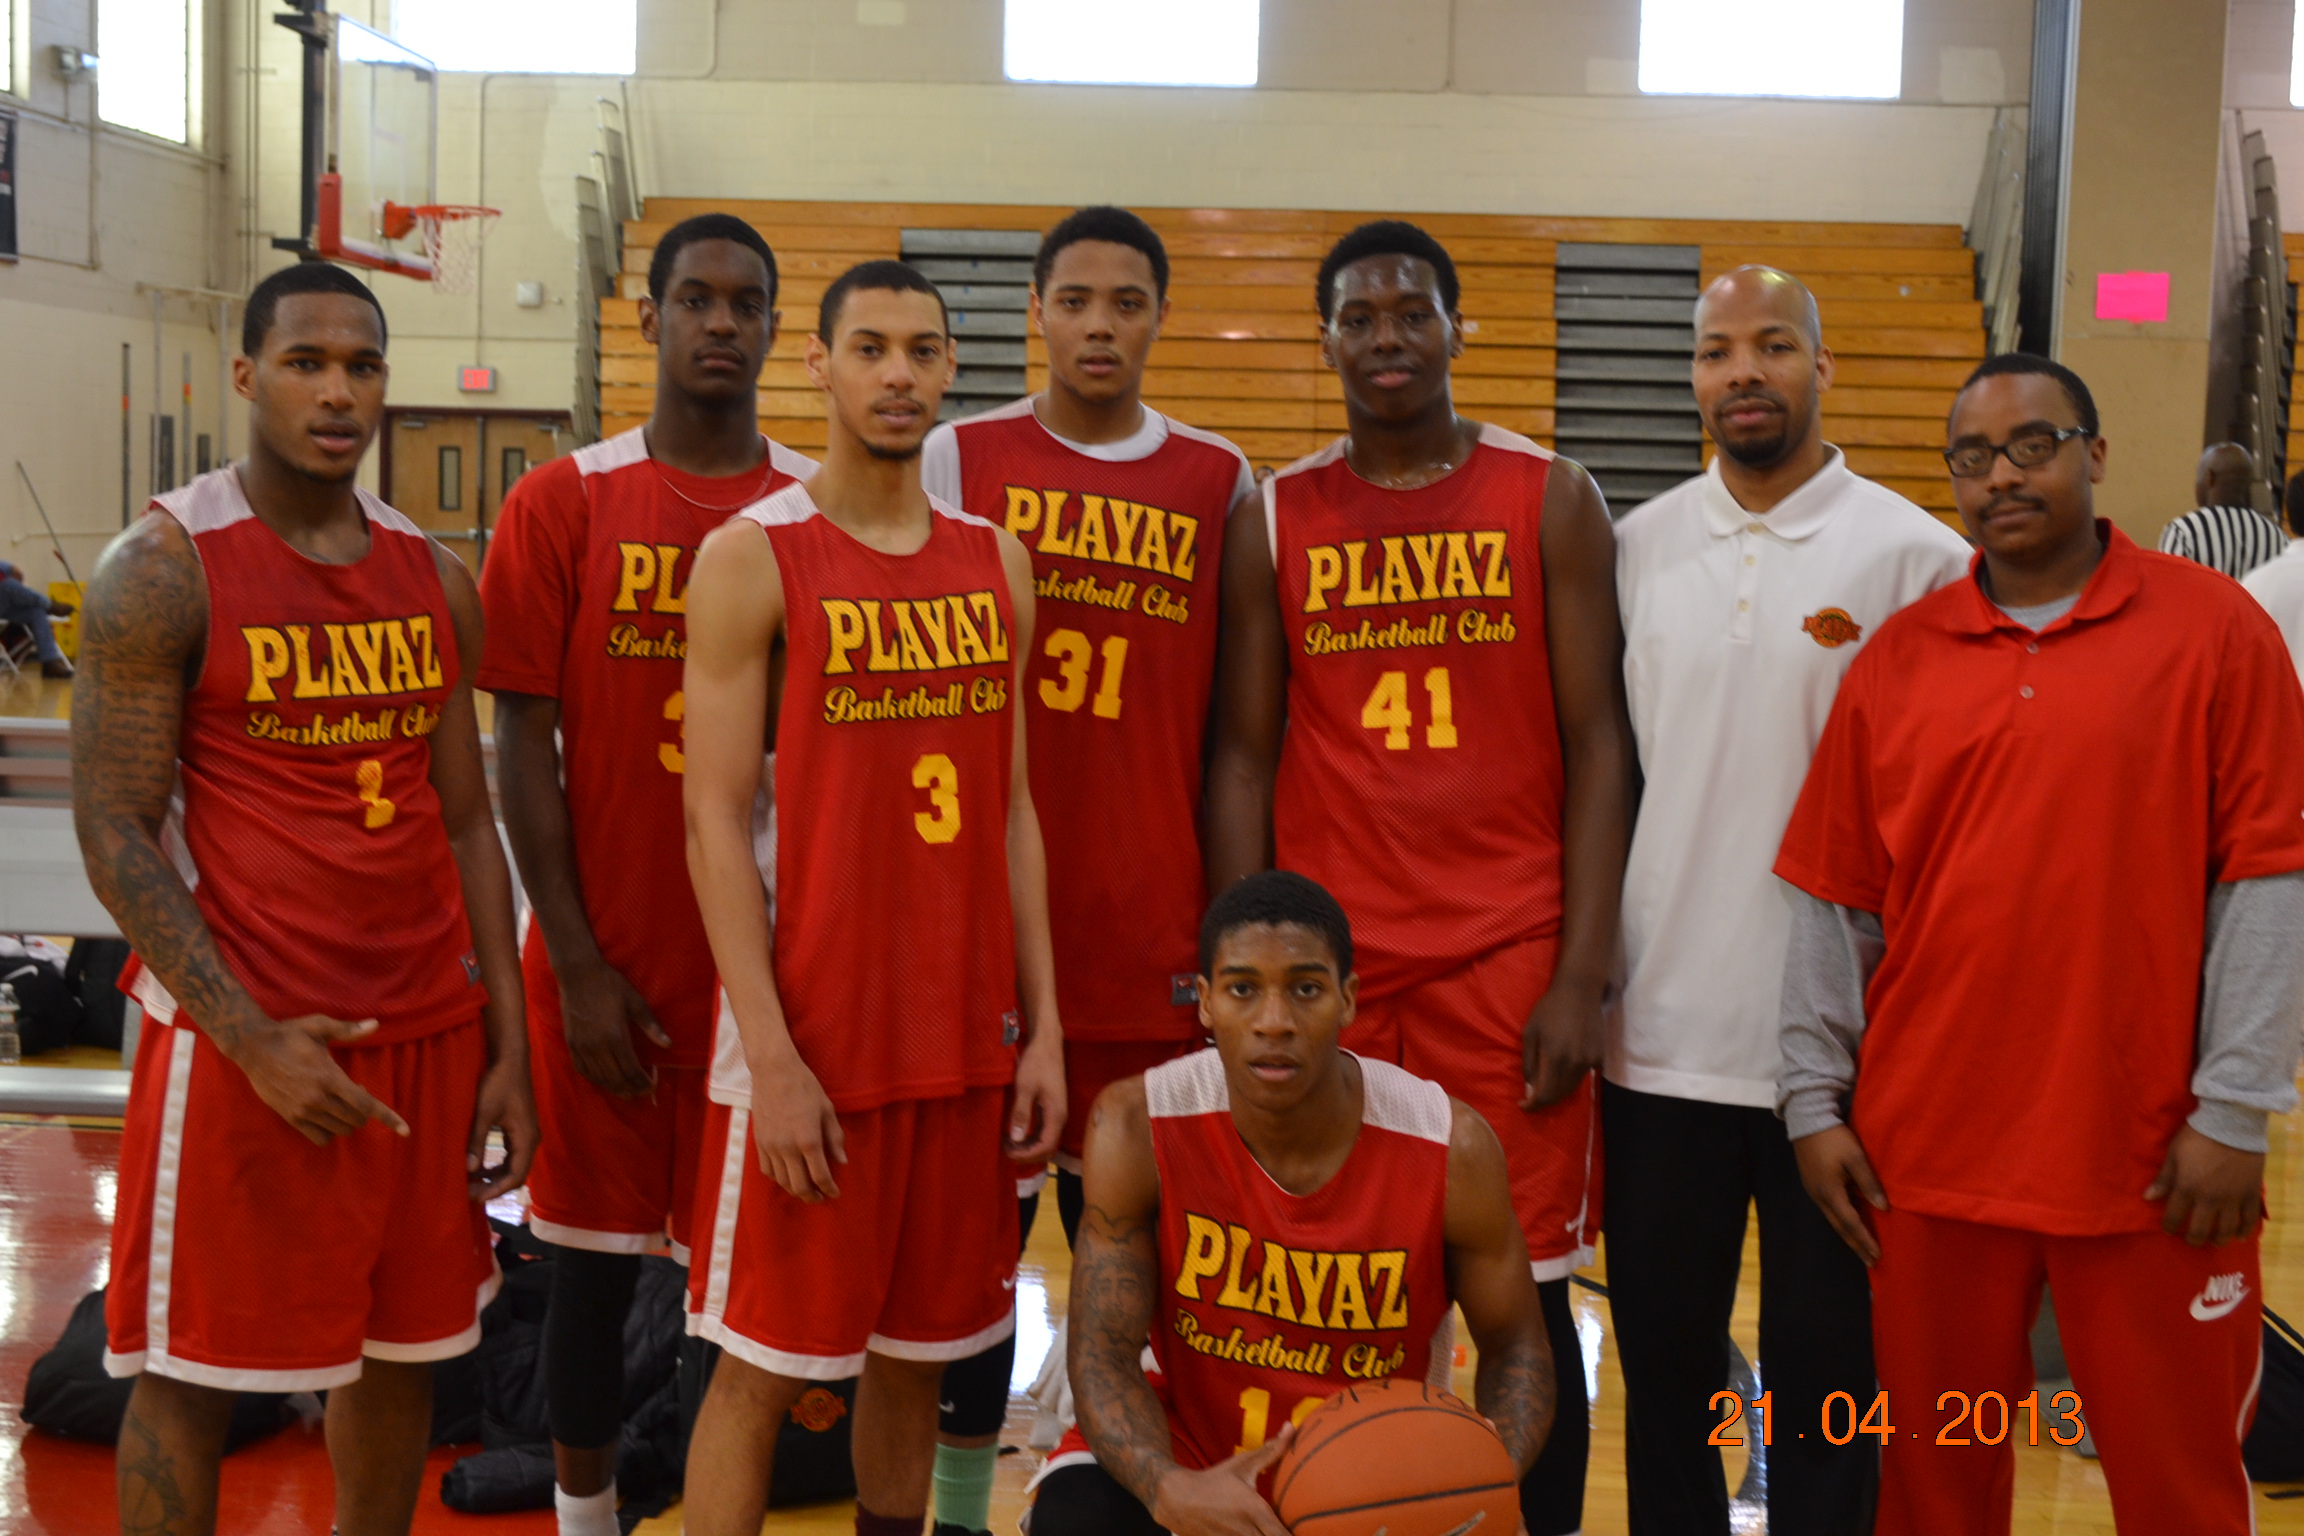 NJ Playaz Basketball Club AAU team.